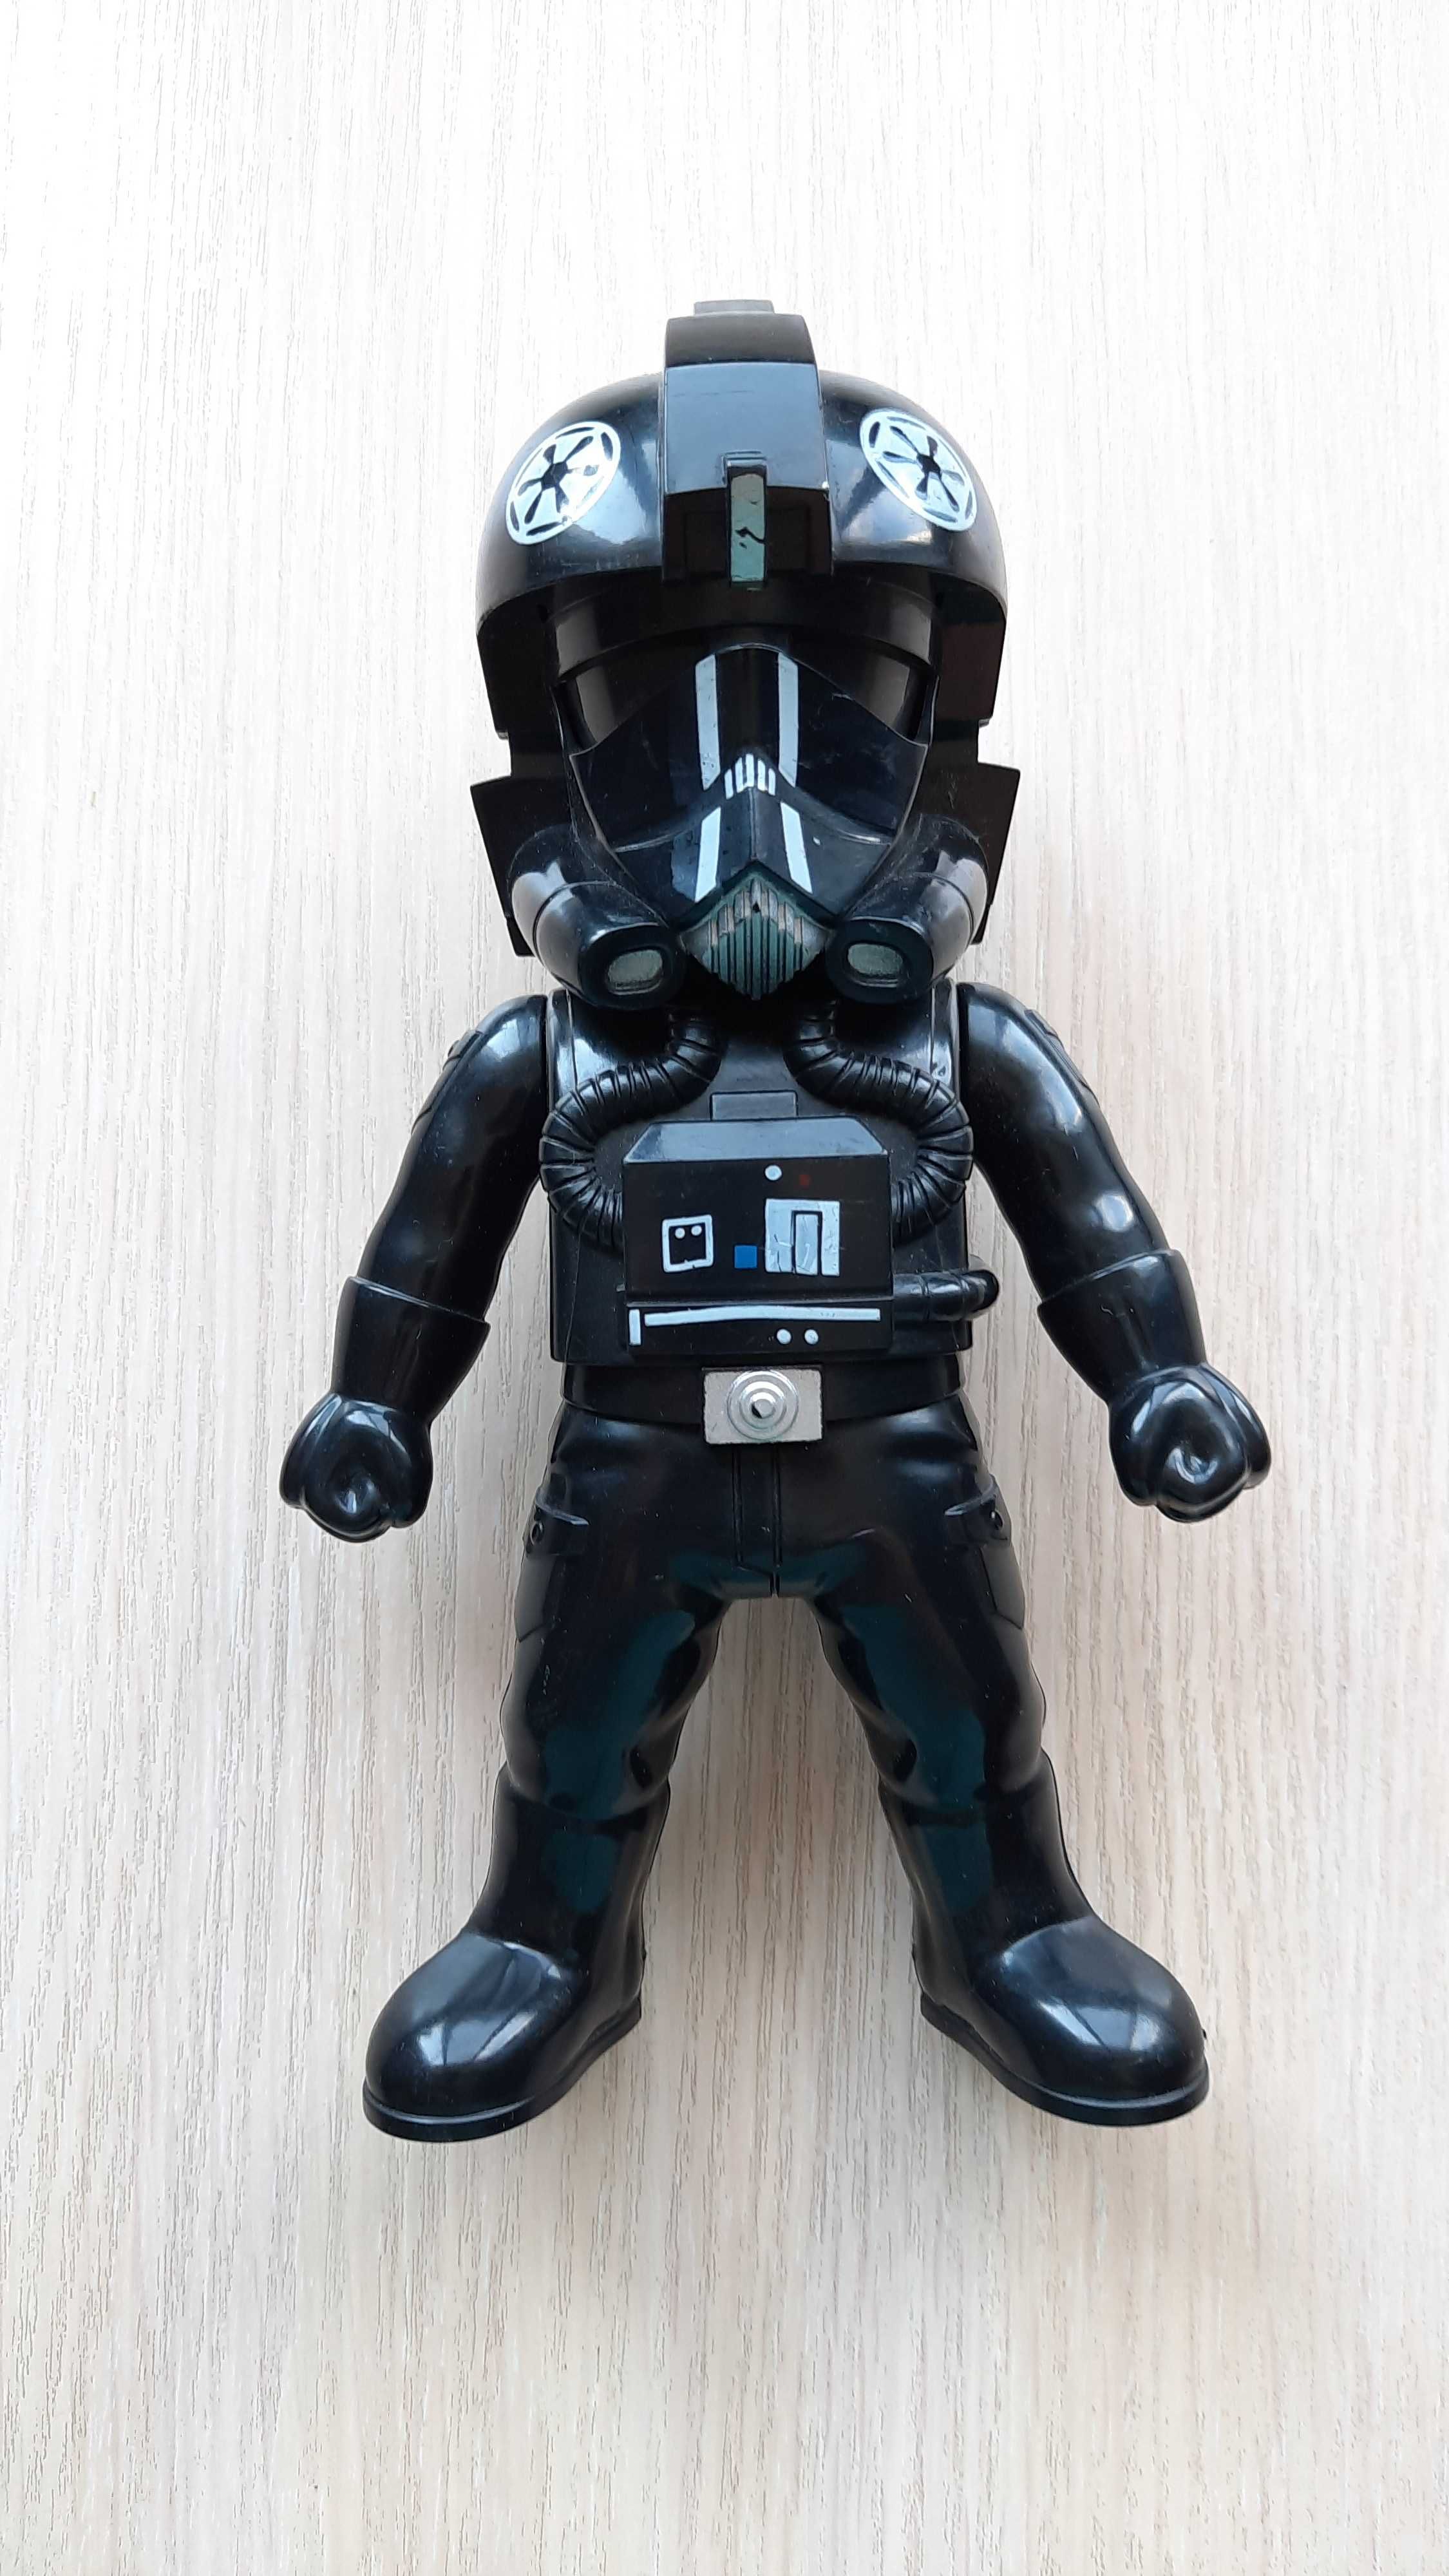 Star Wars фігурка Імперський пілот / Чубакка Chewie - Звездные войны